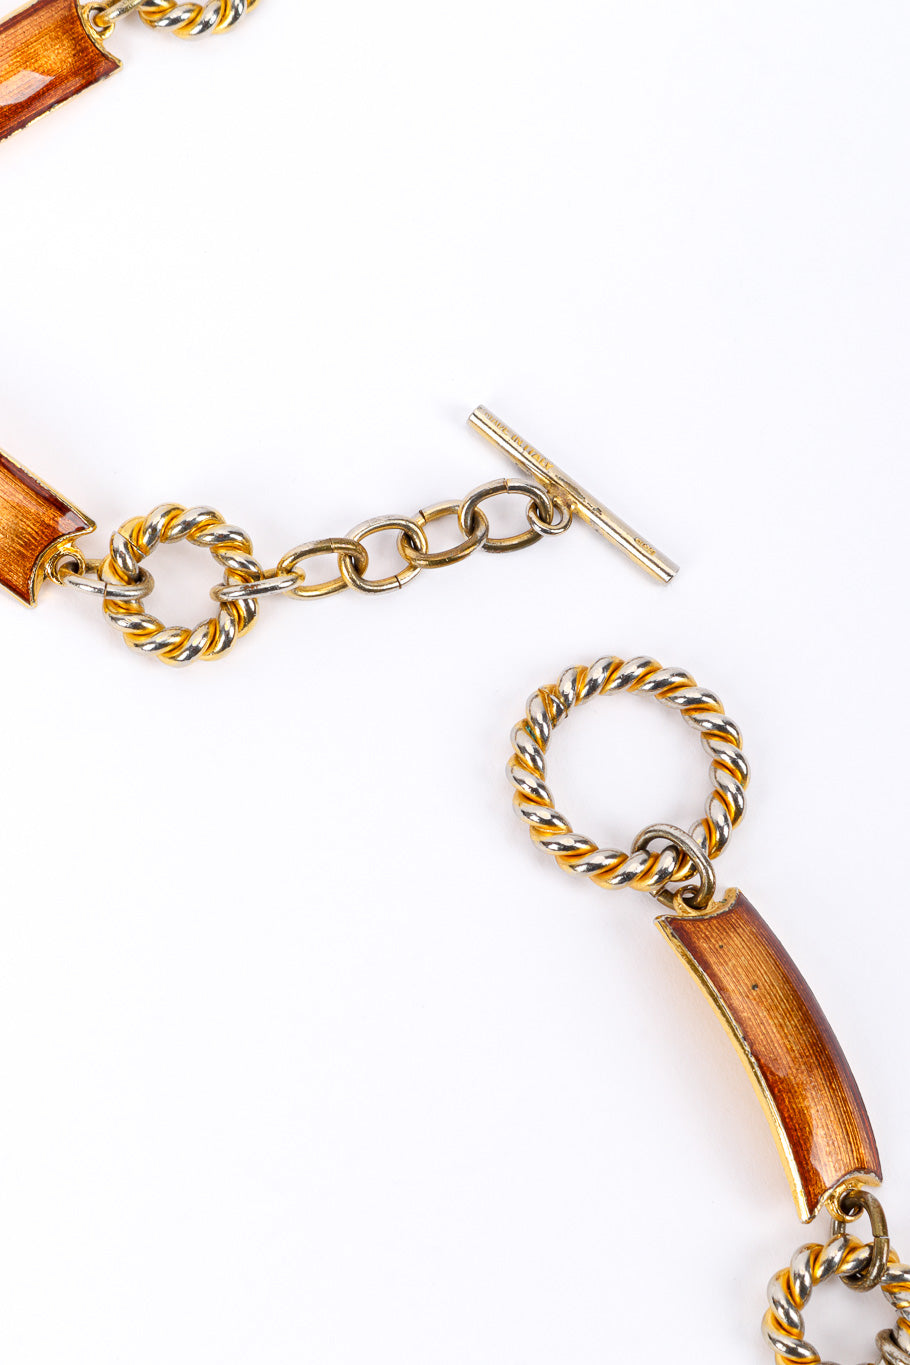 Vintage Gucci Enamel Chain Belt II toggle closure unclasped @recessla